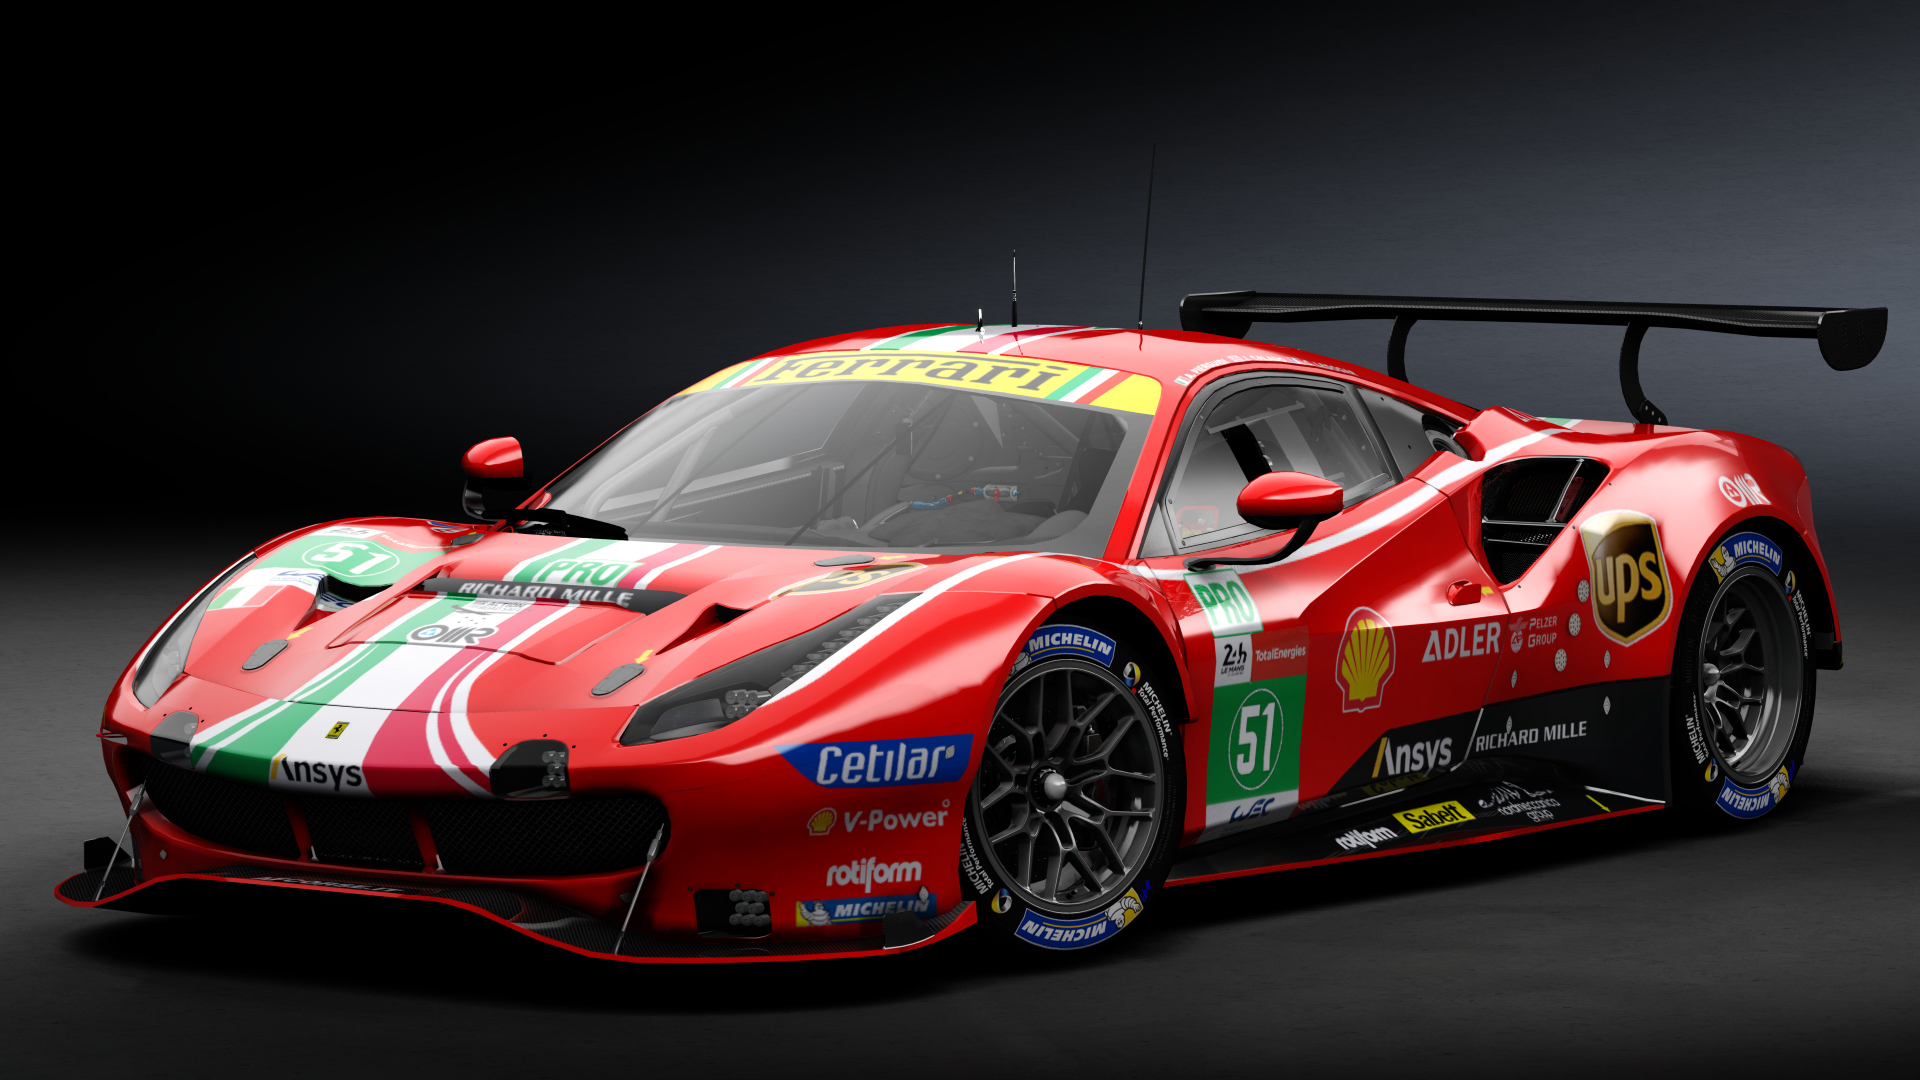 2018 Ferrari 488 GTE Evo Le Mans Spec [Michelotto], skin 2021 #51 AF Corse LM24